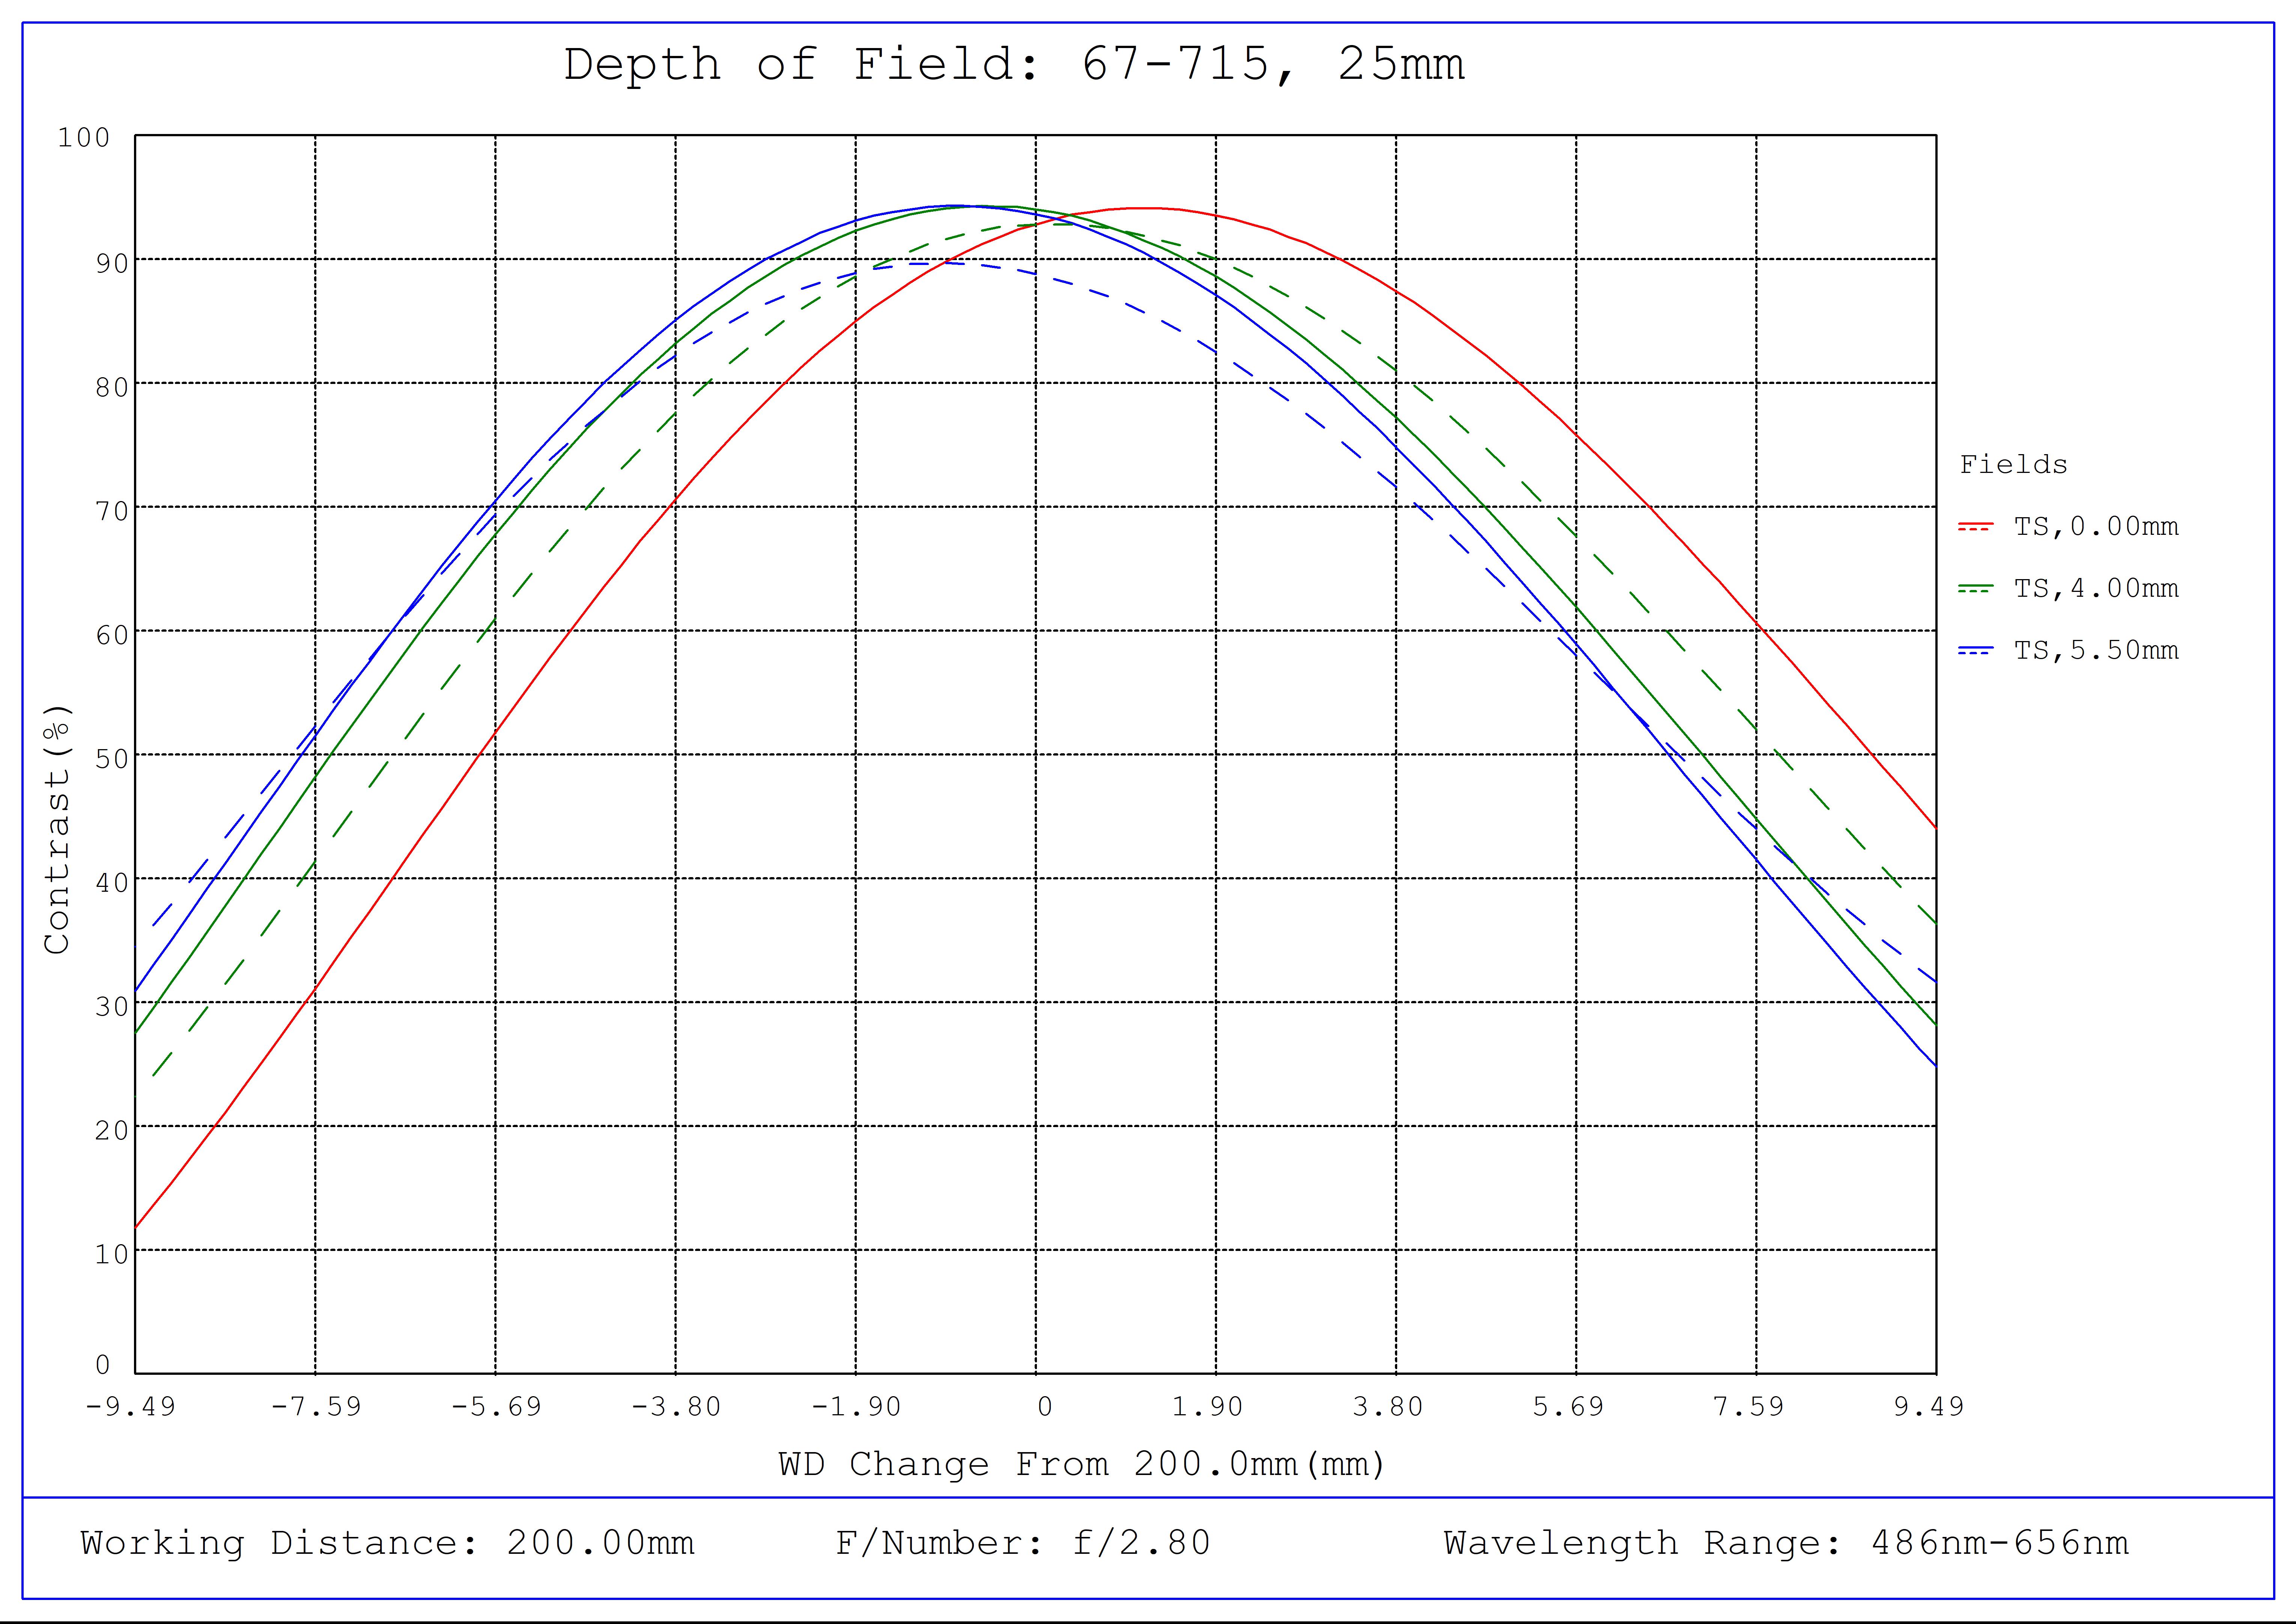 #67-715, 25mm C VIS-NIR Series Fixed Focal Length Lens, Depth of Field Plot, 200mm Working Distance, f2.8